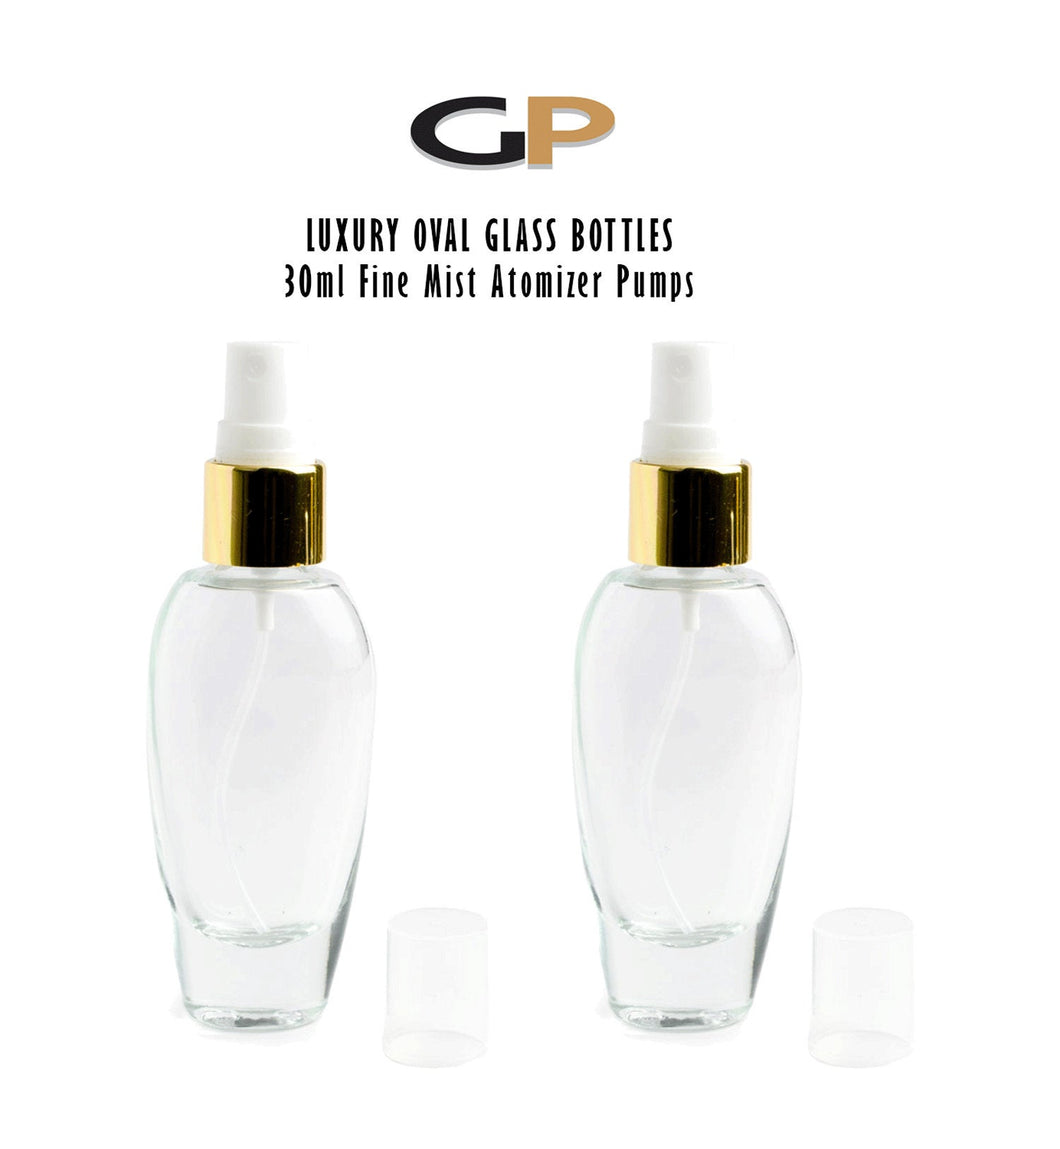 2Pcs 1 Oz LUXURY Glass Atomizer 30ml OVAL Tear Drop Perfume Bottles Fine Mist Spray Gold or Silver Metalllic Cap Refillable w/ Clear Hood